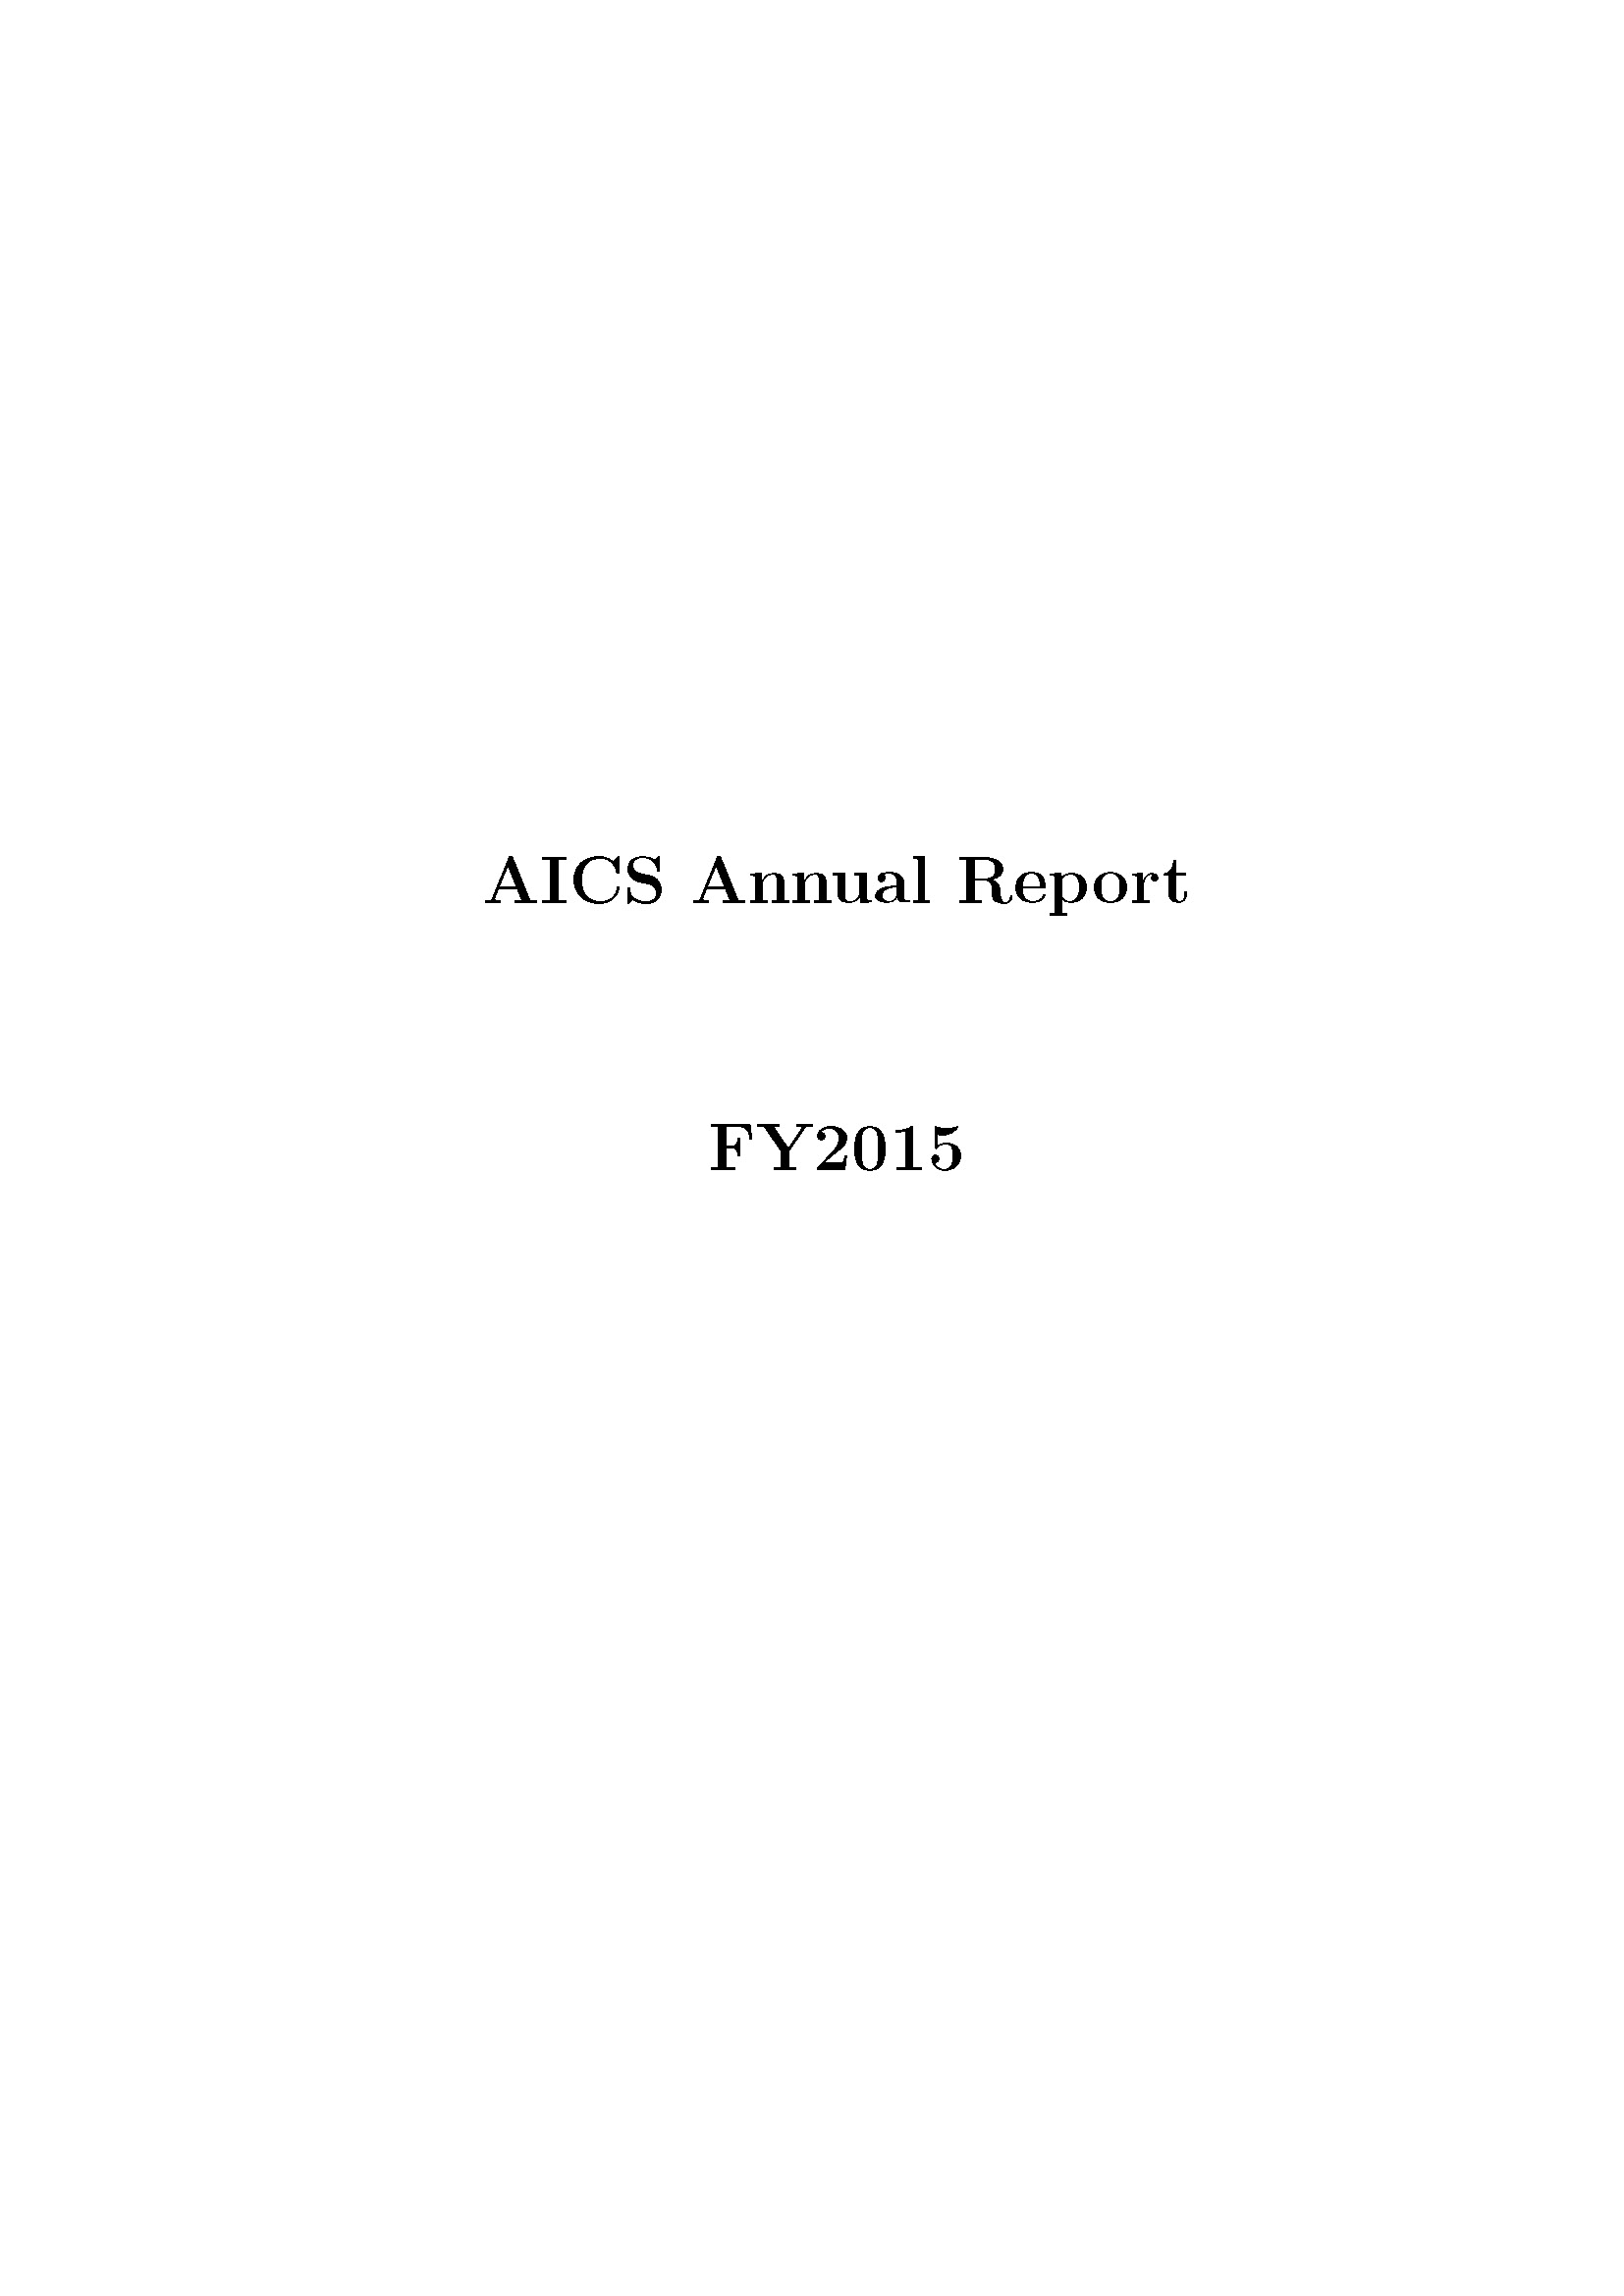 R-CCS Annual Report Cover 2015